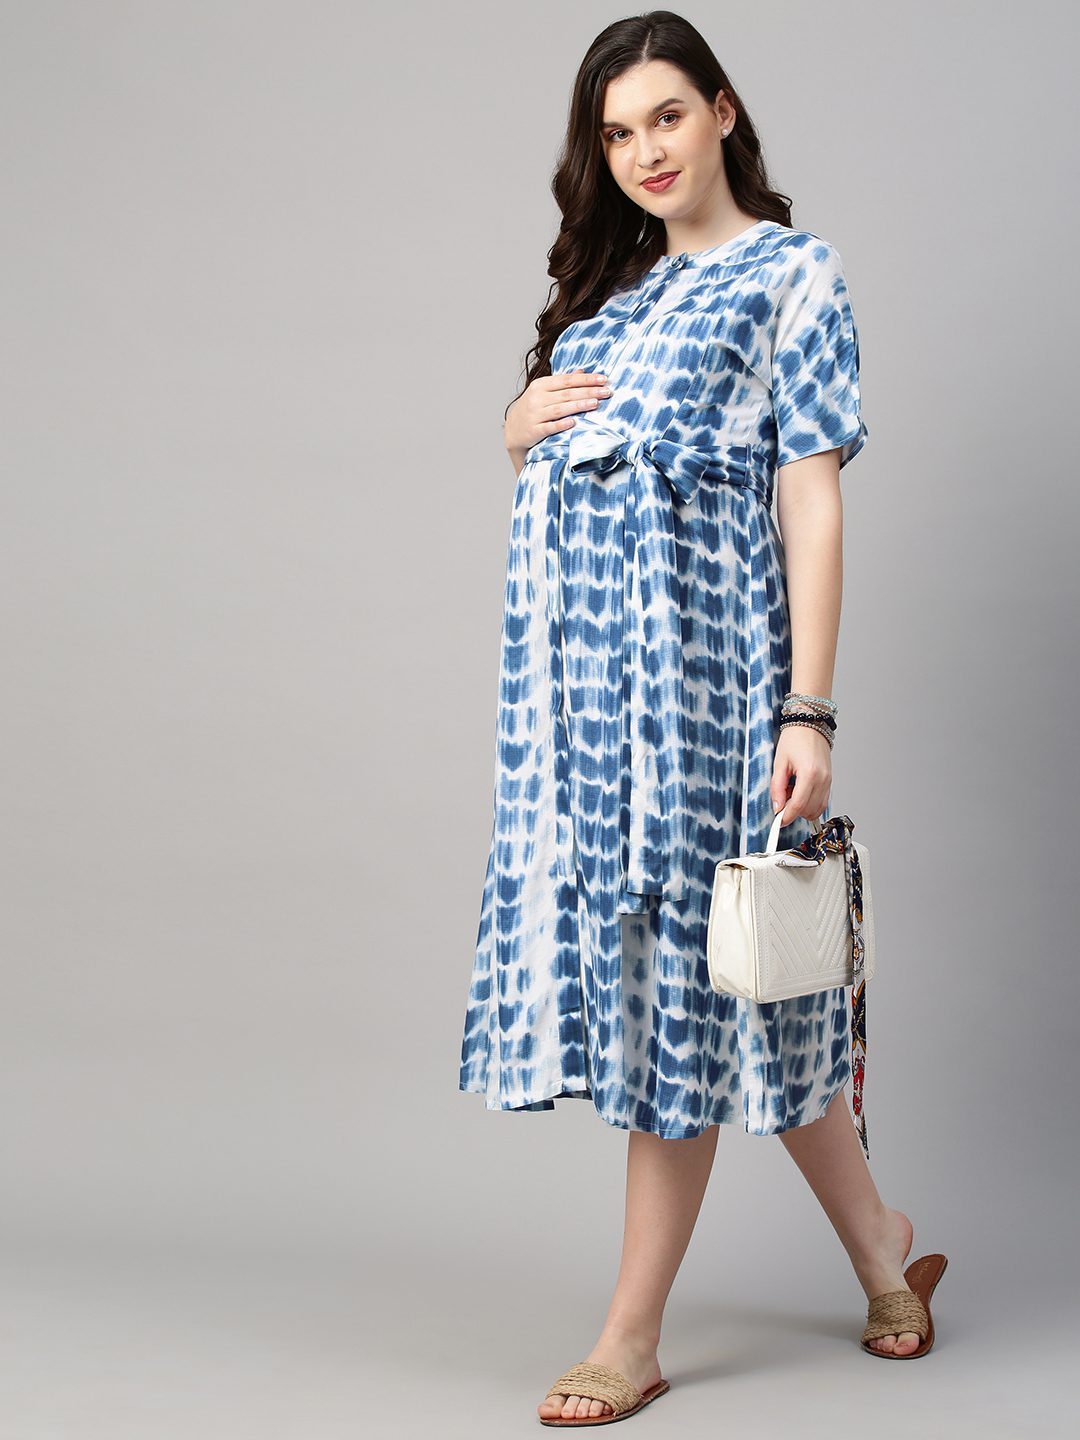 Womens Maternity Dresses Pregnant Long Sleeve Pregnant Photography Bodycon  Dress | eBay